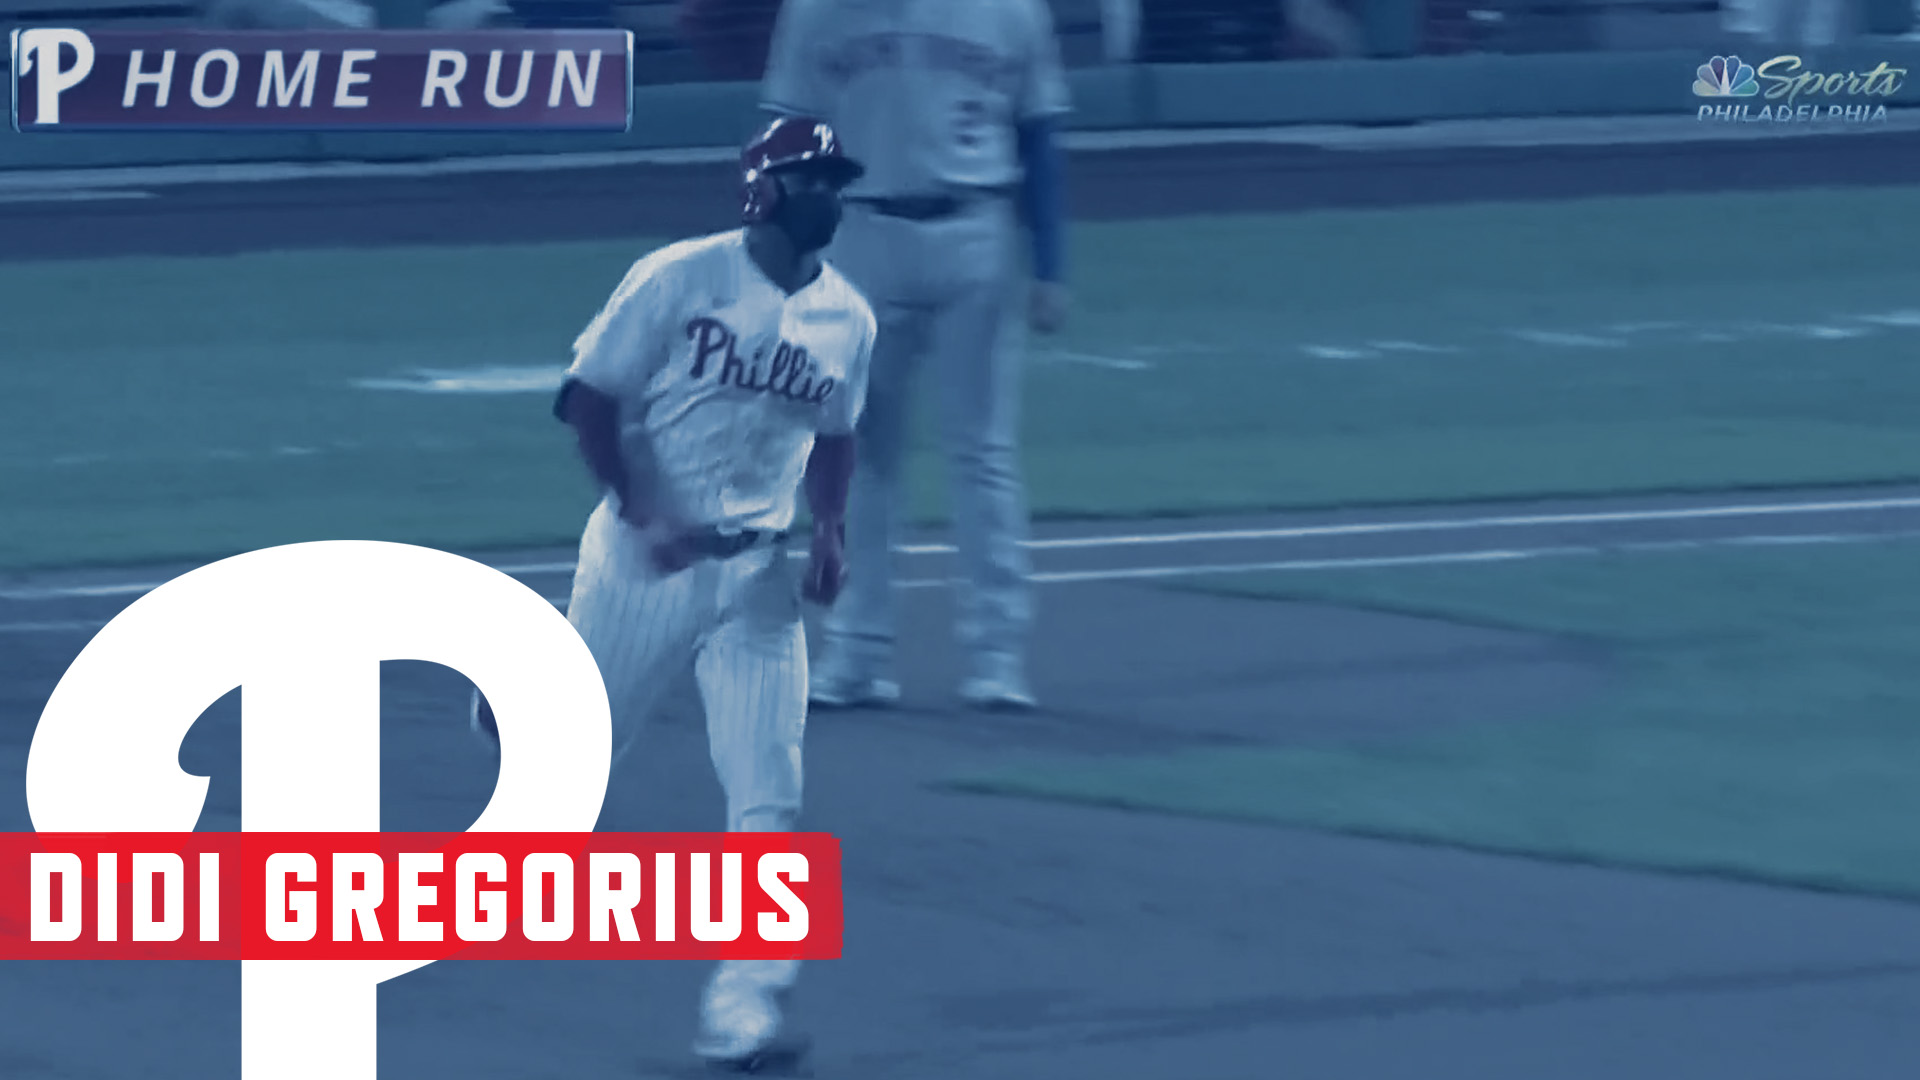 DIDI DINGER — Gregorius launches his 8th home run of the season